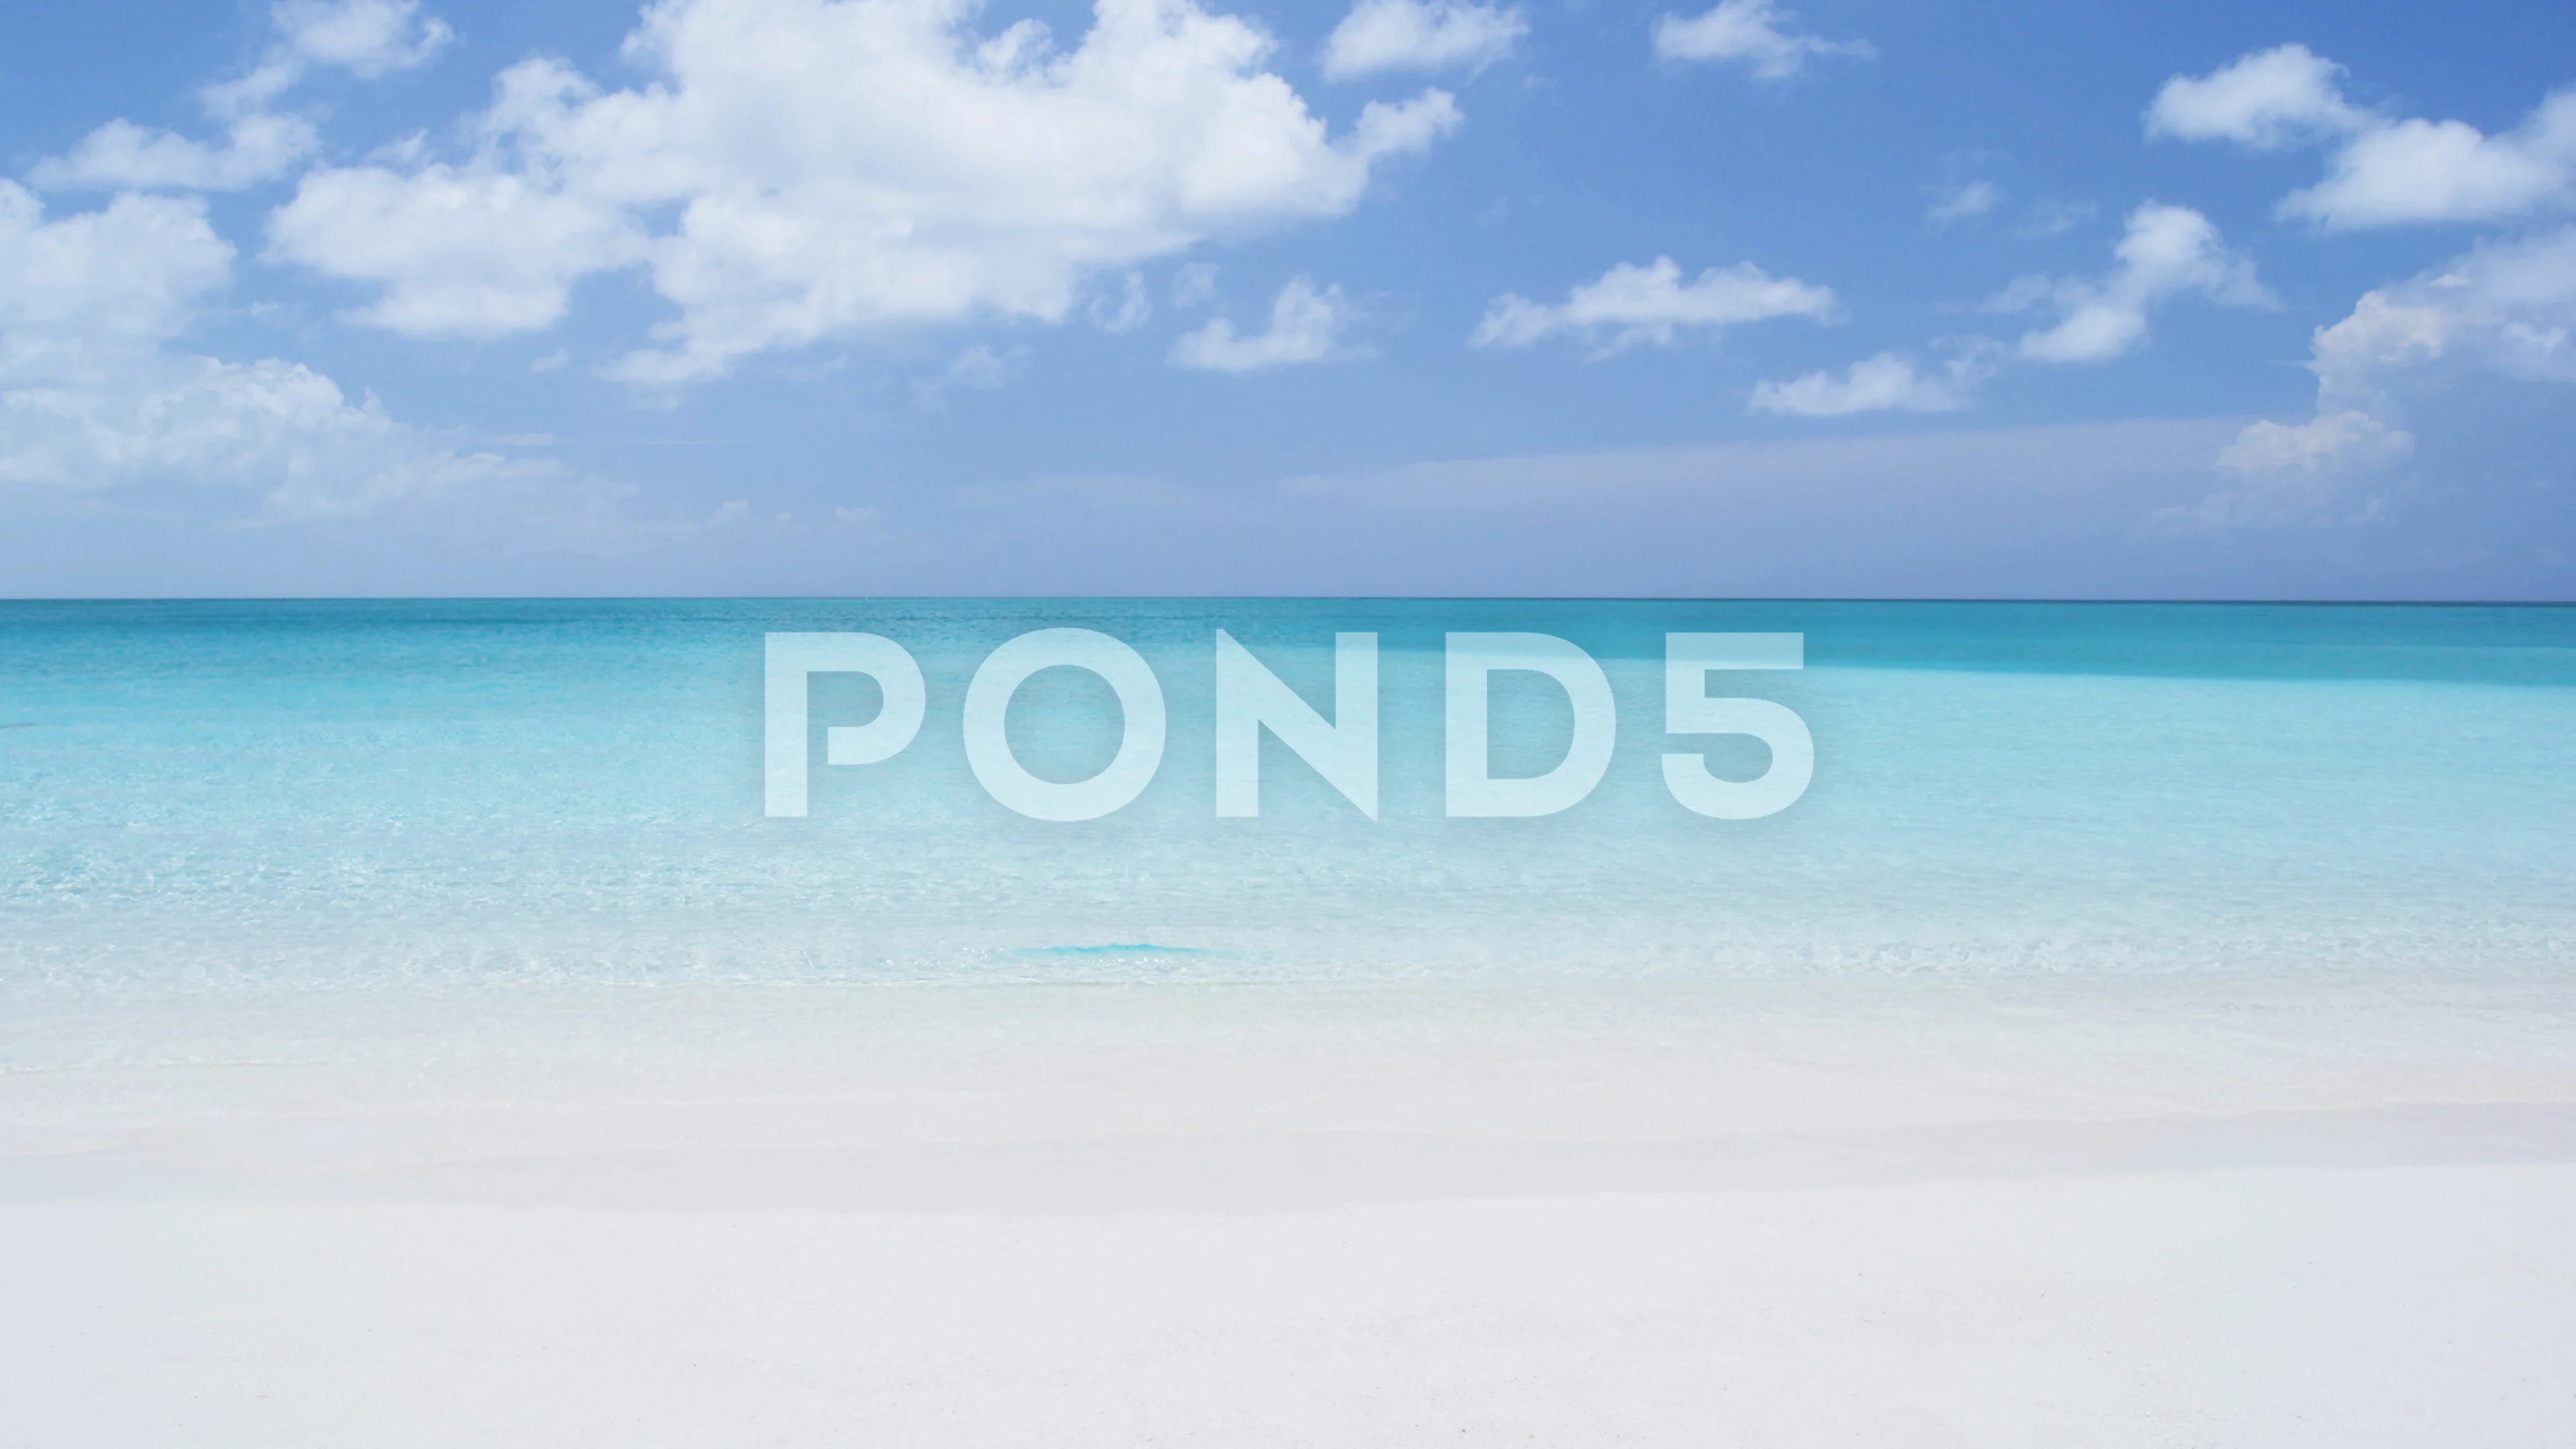 SEAMLESS LOOP VIDEO: Beach background - ... | Stock Video | Pond5